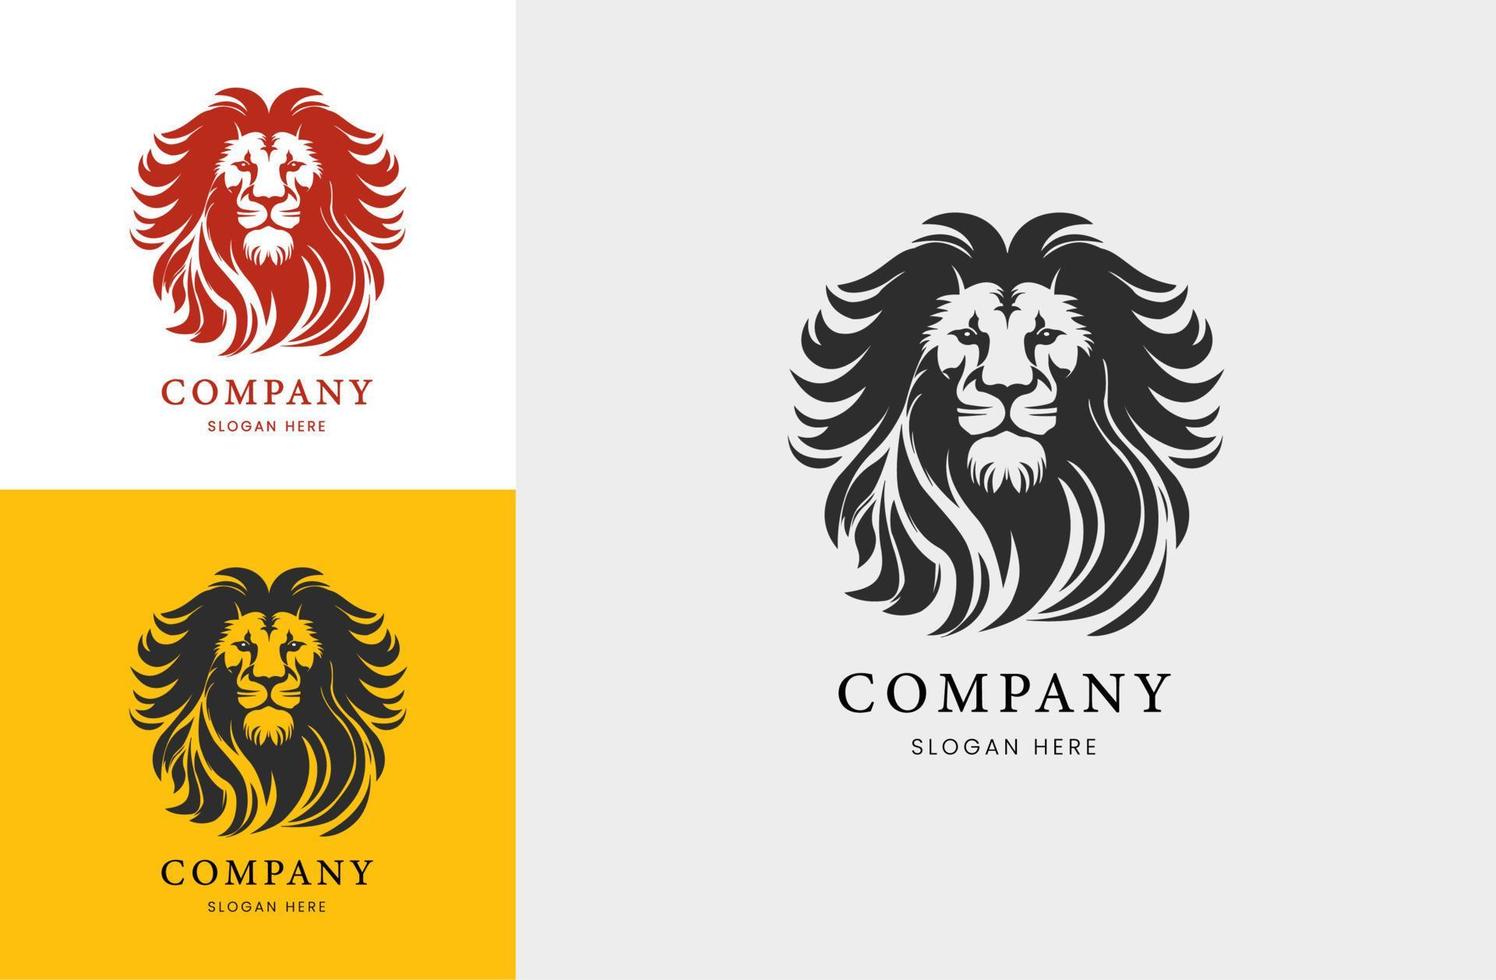 Royal king lion logo design. Elegant Leo animal logo. Premium luxury brand identity icon. Vector illustration